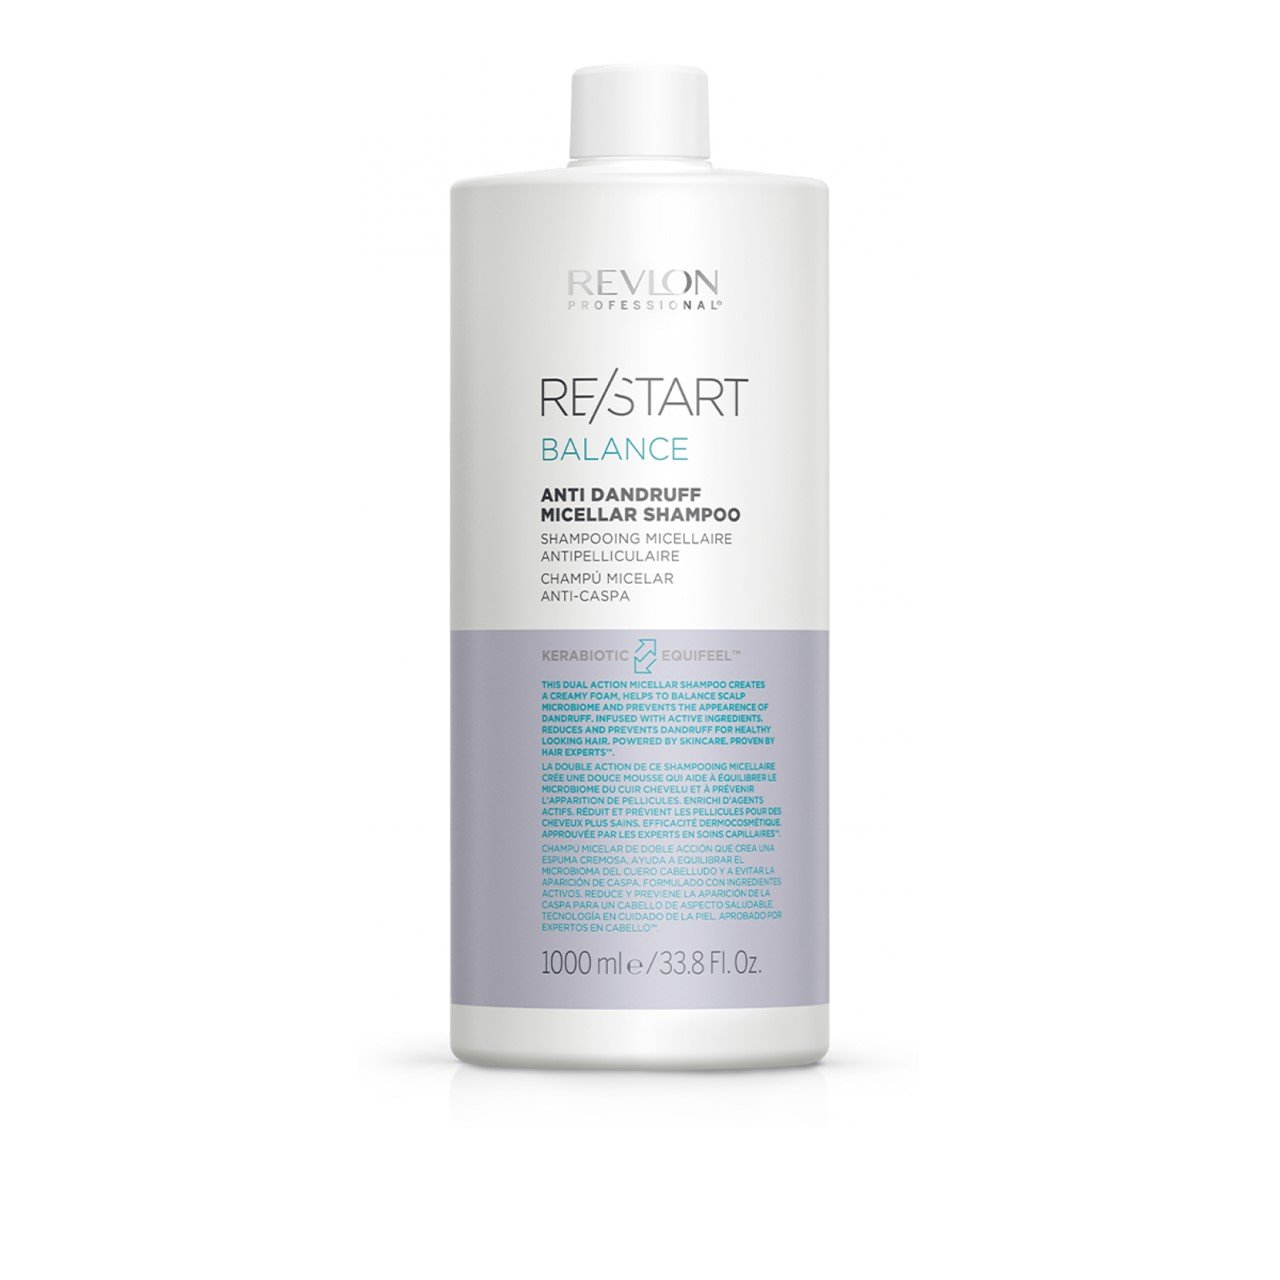 Revlon Professional Re/Start Balance Anti-Dandruff Shampoo 1L (33.81fl oz)